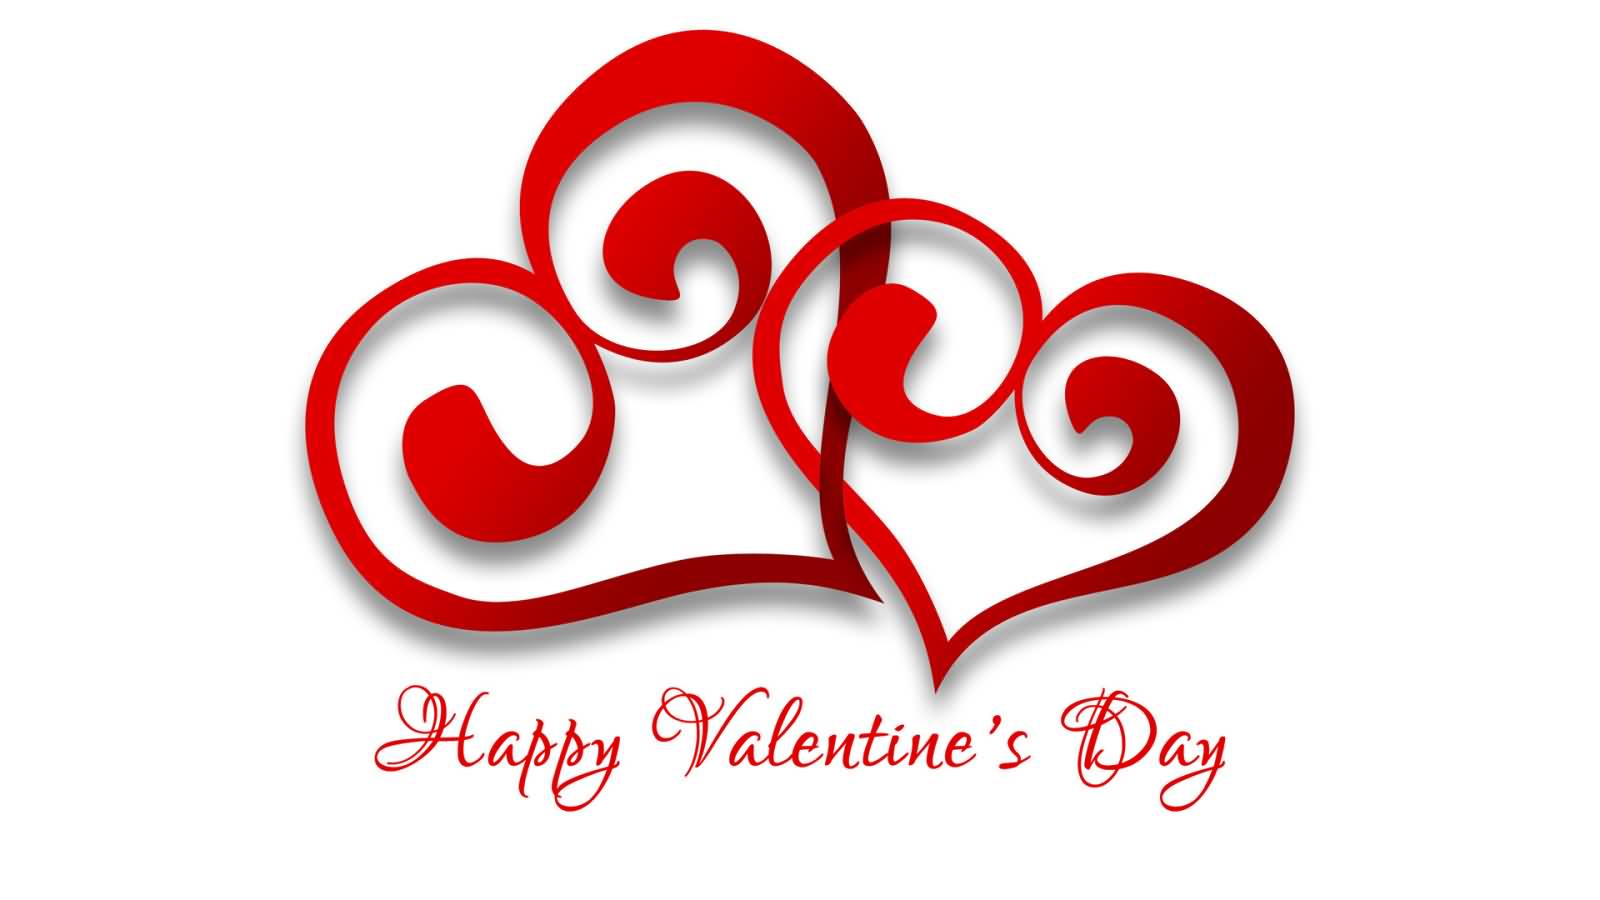 Happy Valentine's Day Hearts Design